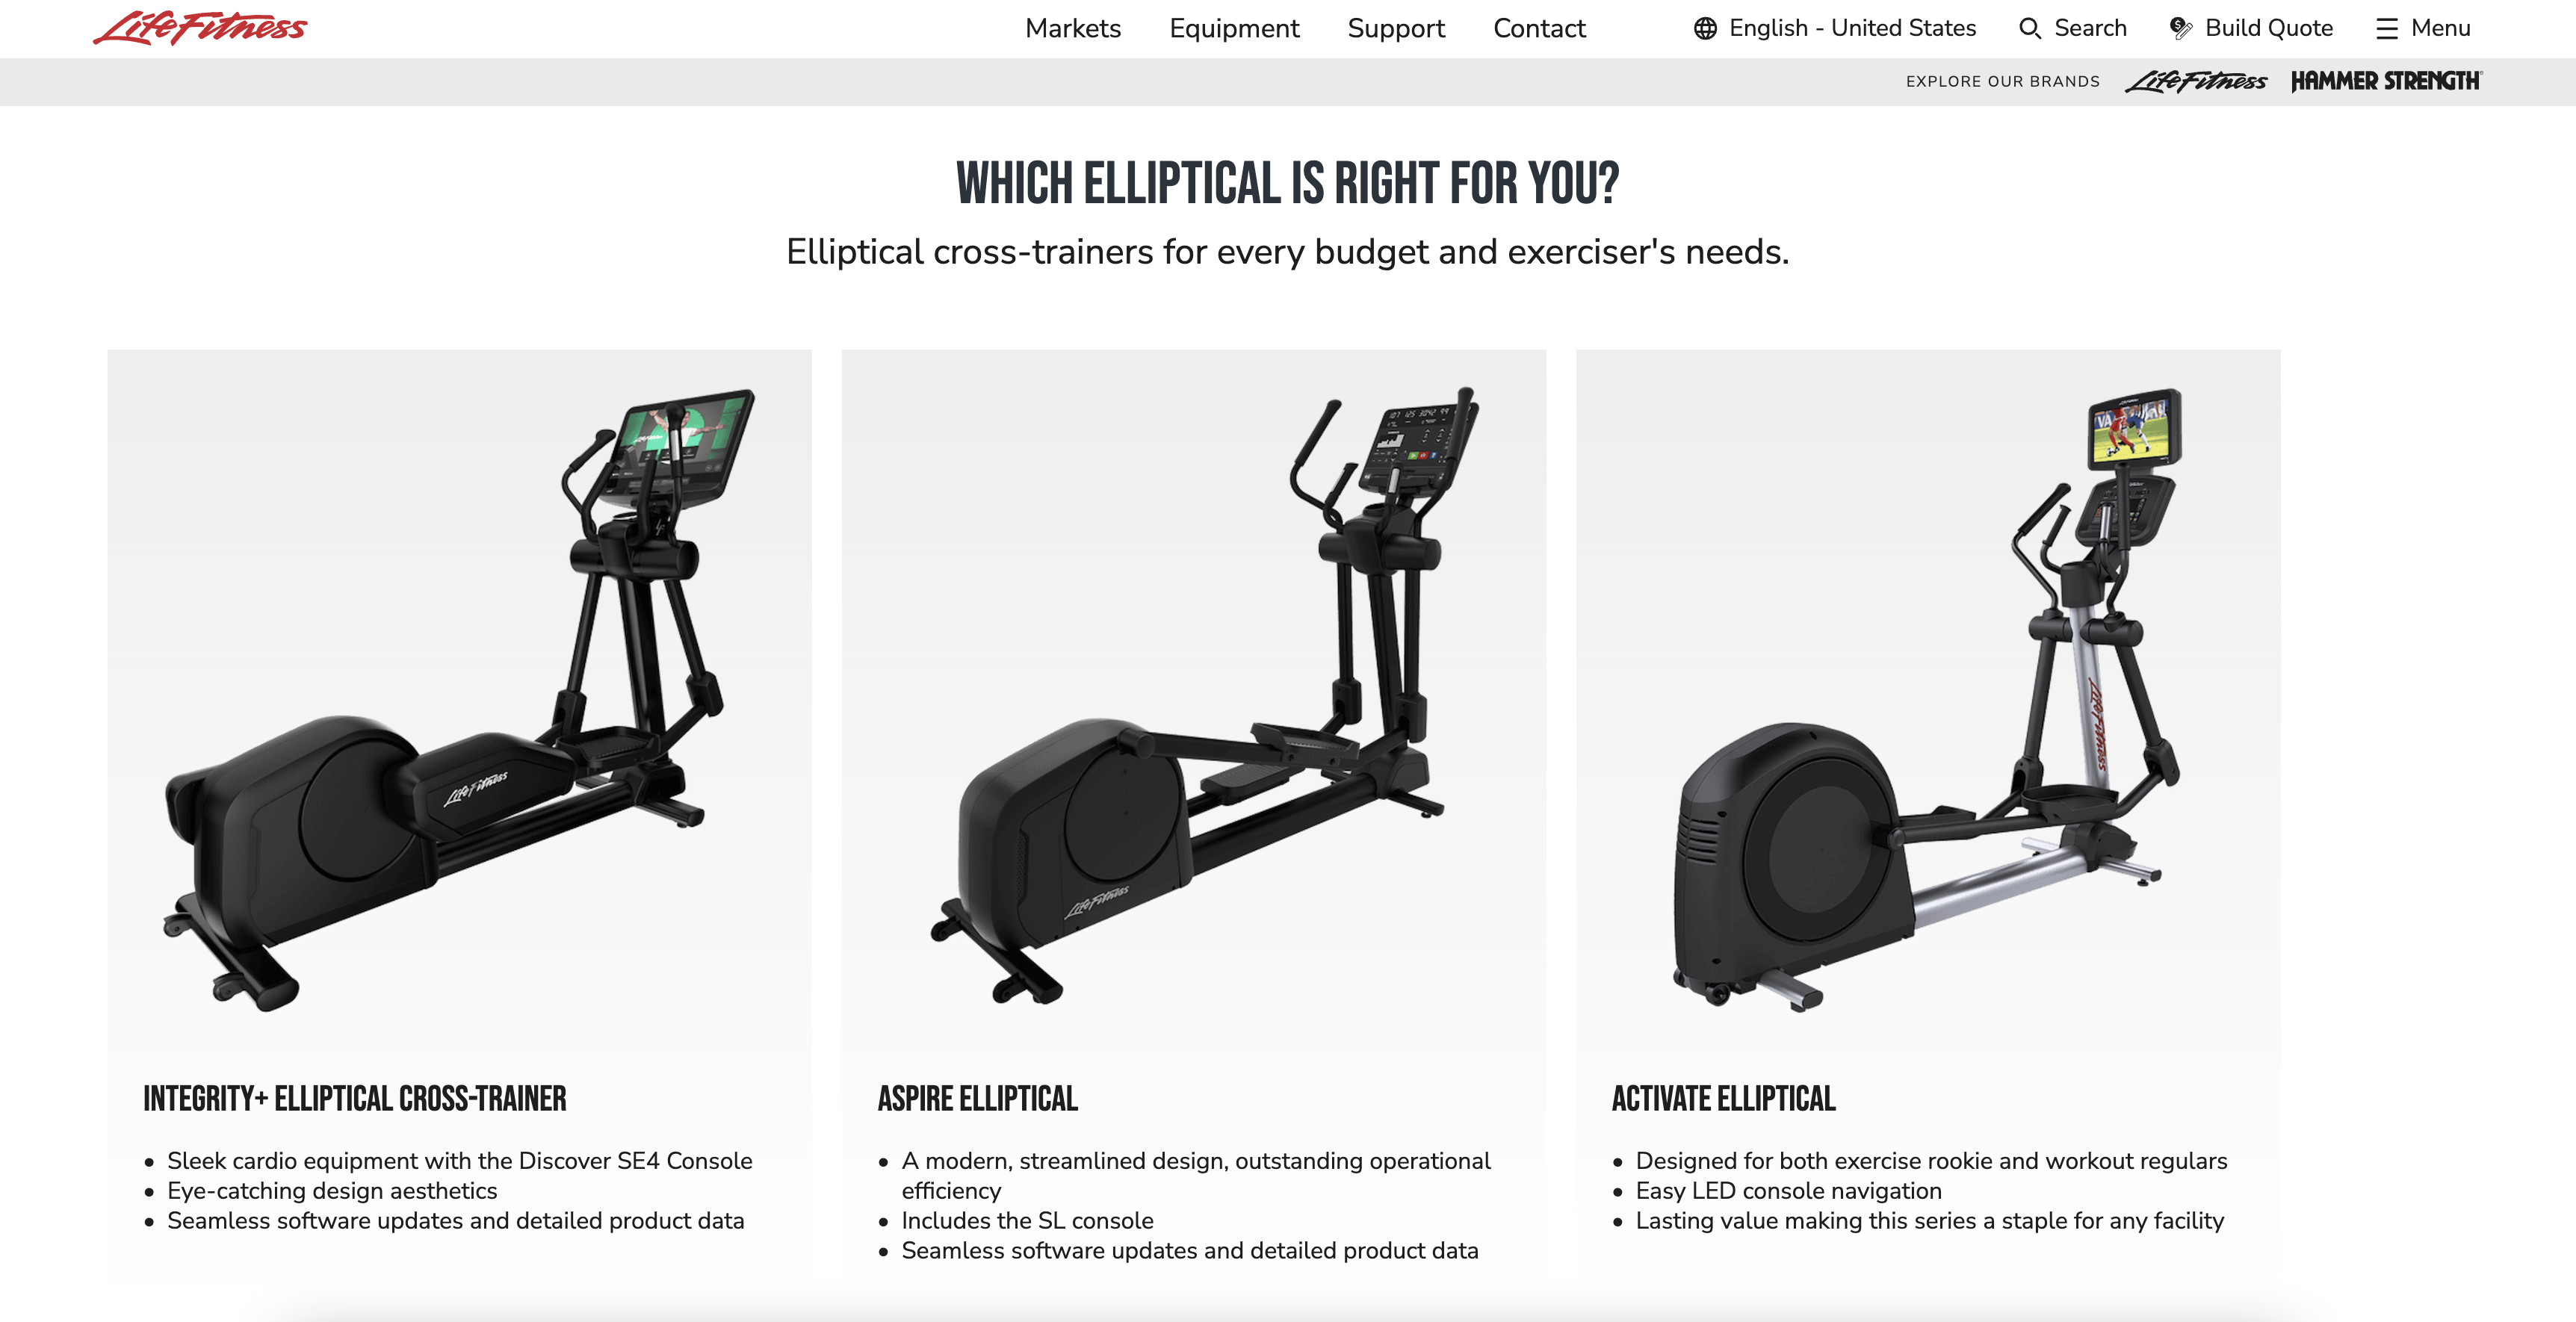 three different versions of ellipticals